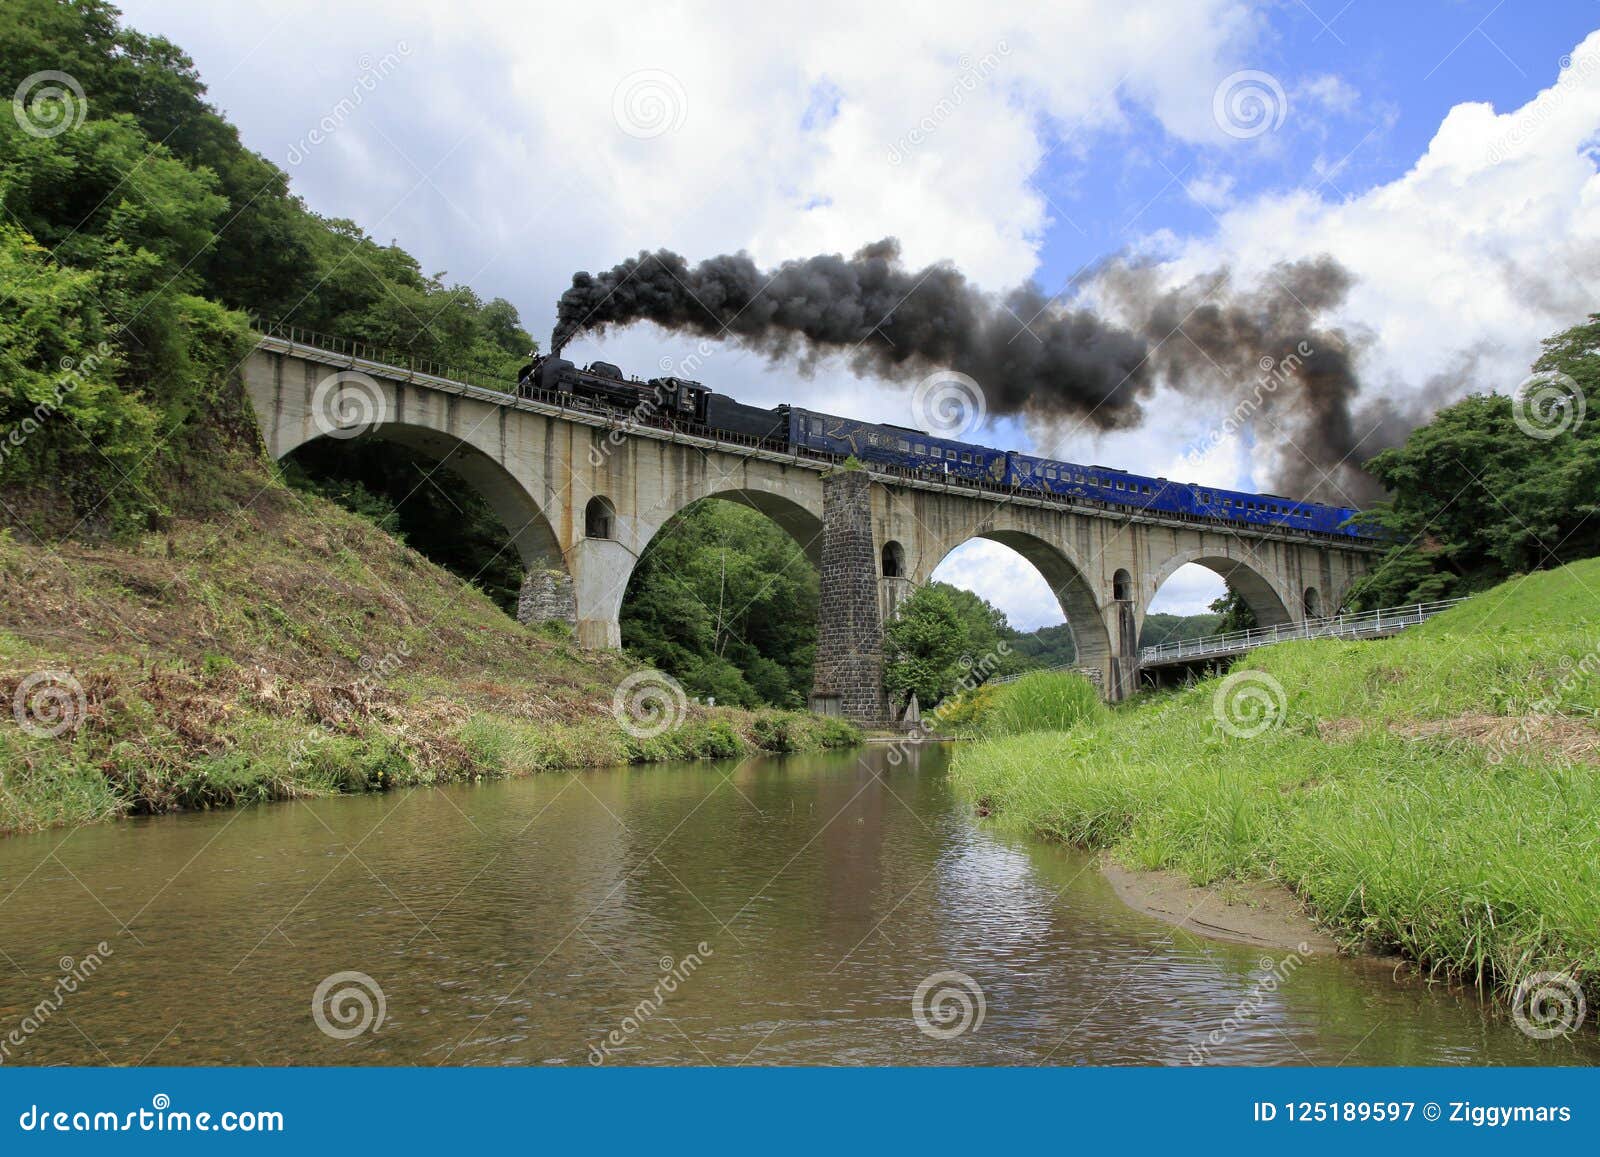 miyamori bridge and steam locomotive